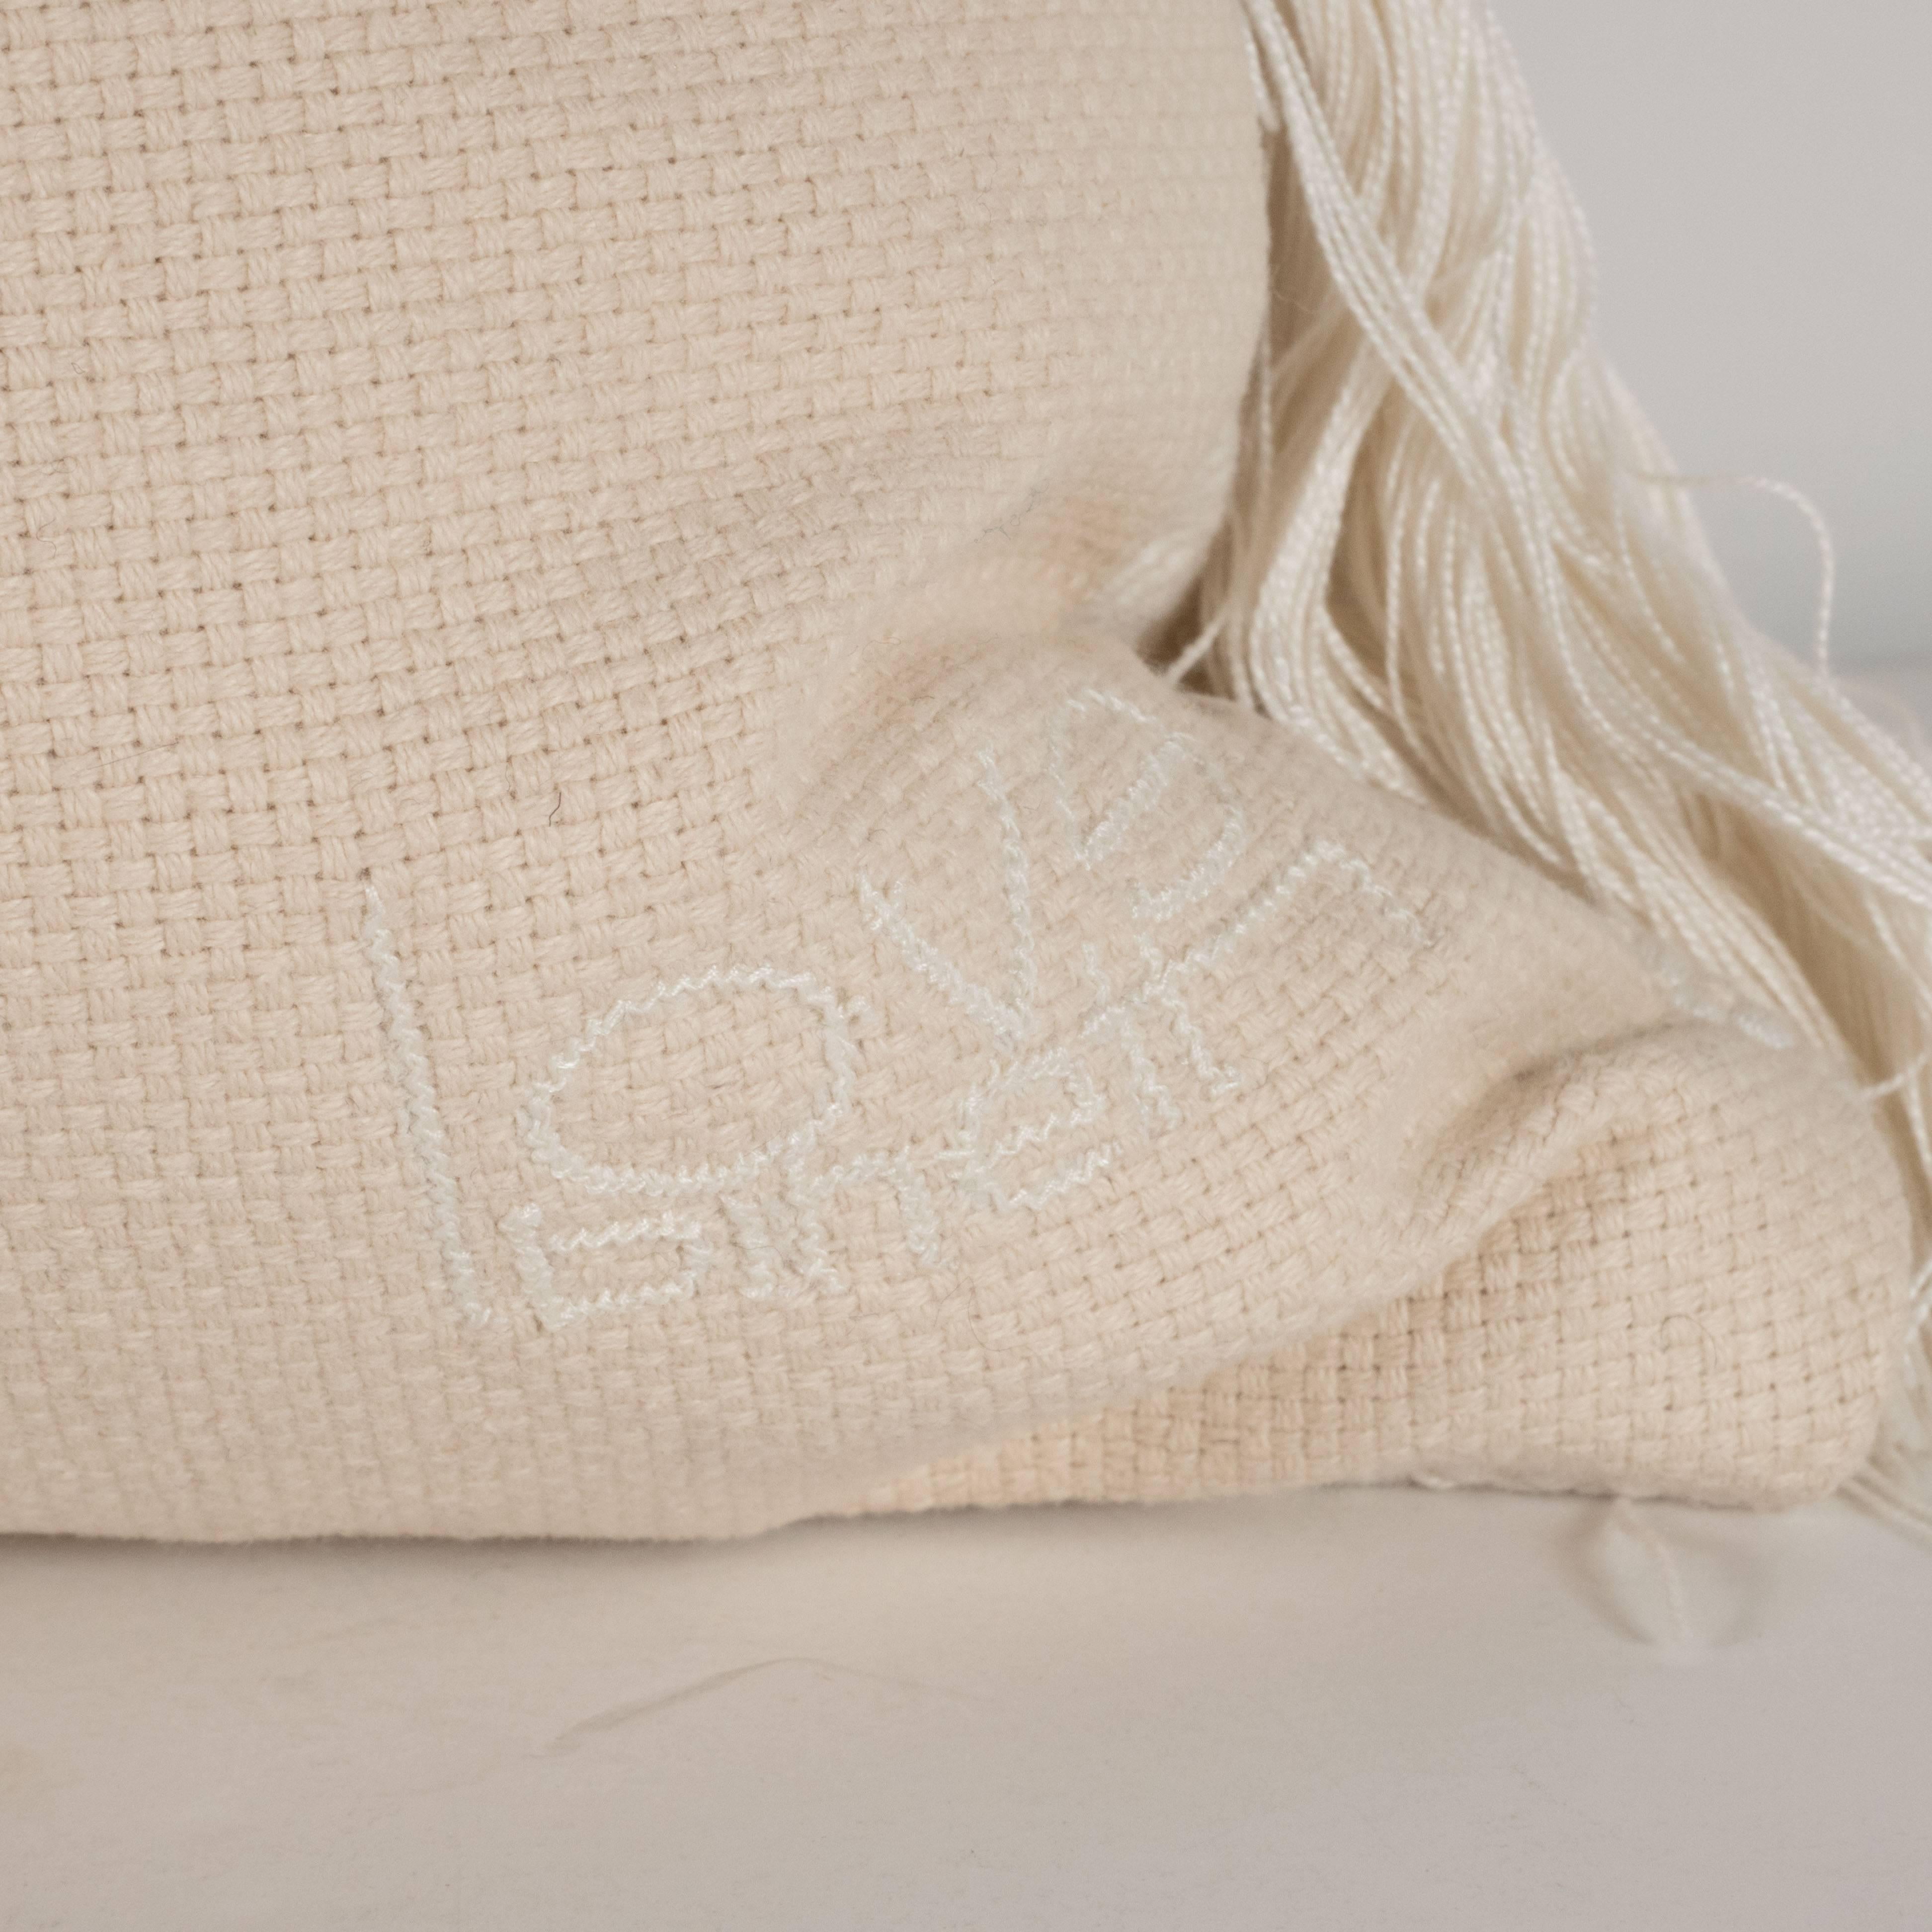 Cotton Pair of Modernist Textured Woven Pillows in a Bone Hue